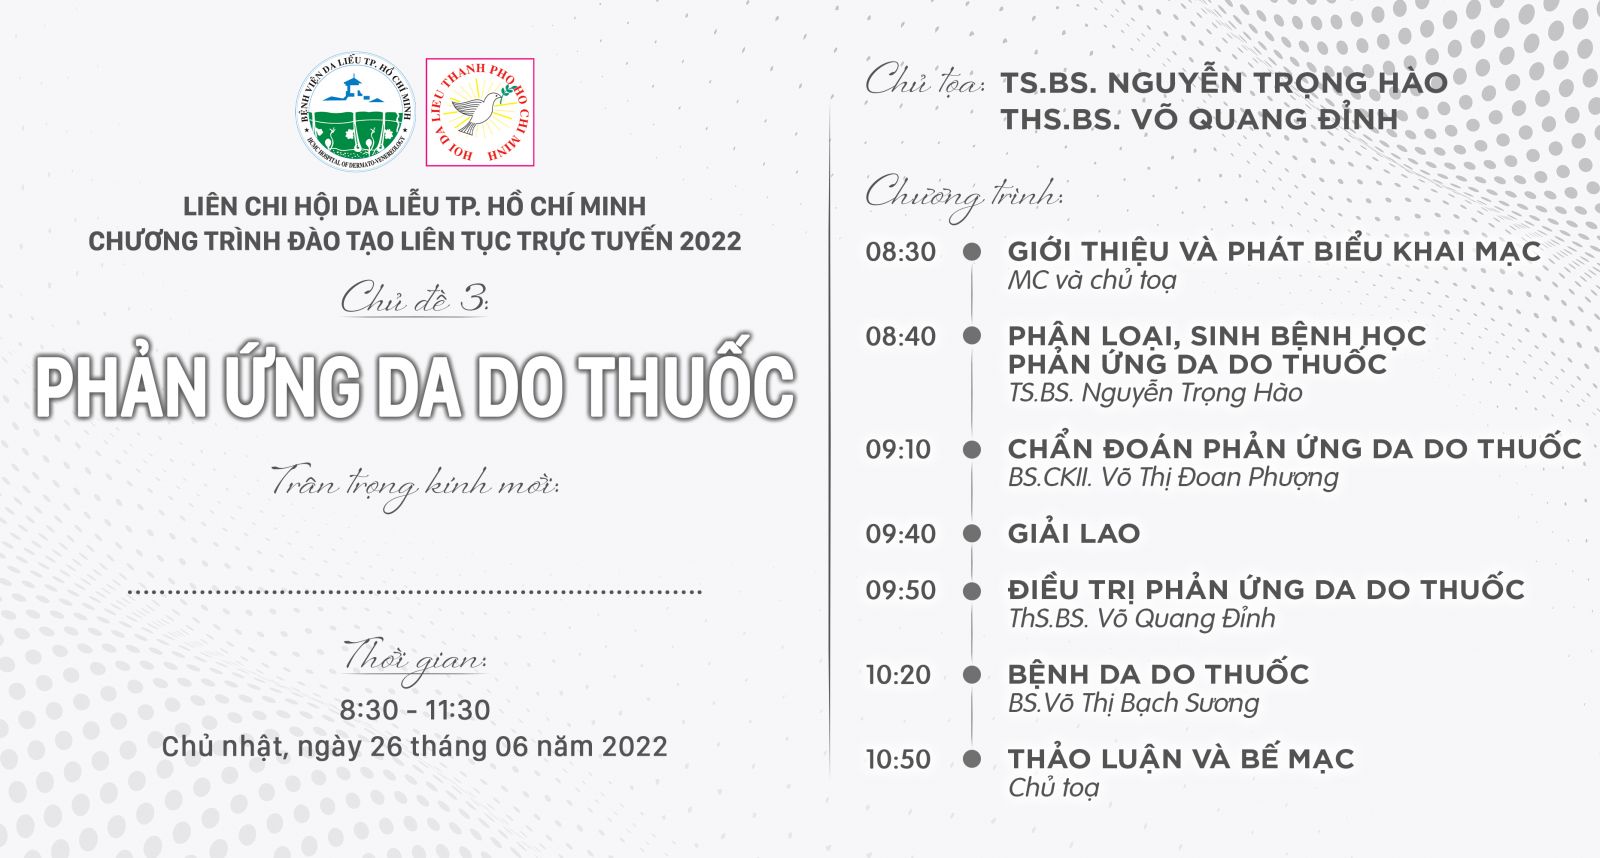 thong-bao-phan-ung-da-do-thuoc